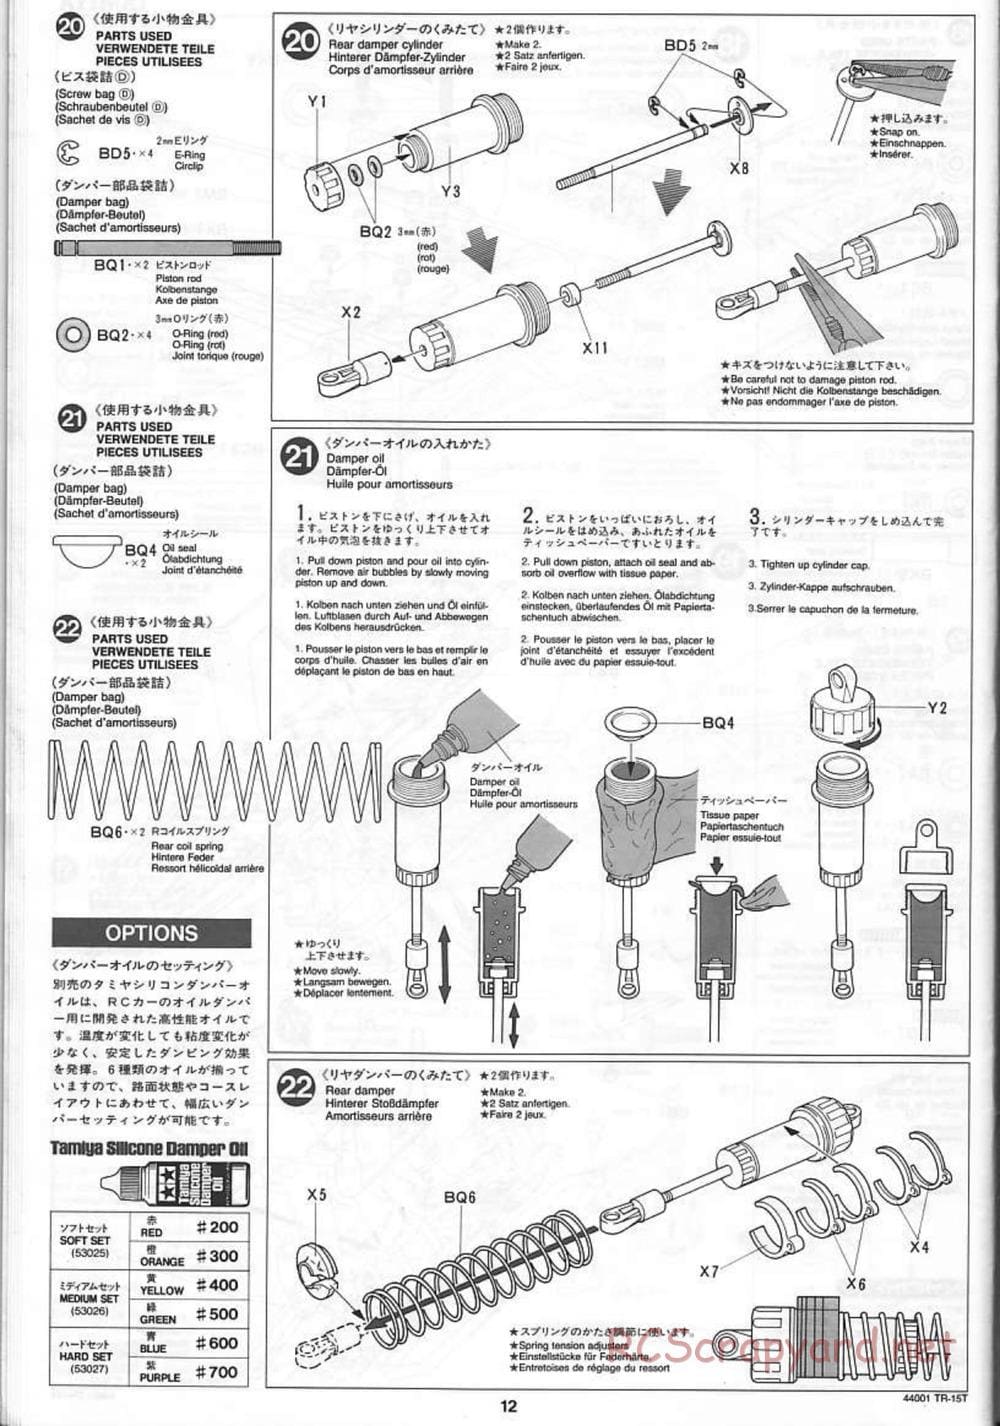 Tamiya - Stadium Racing Truck TR-15T Chassis - Manual - Page 12